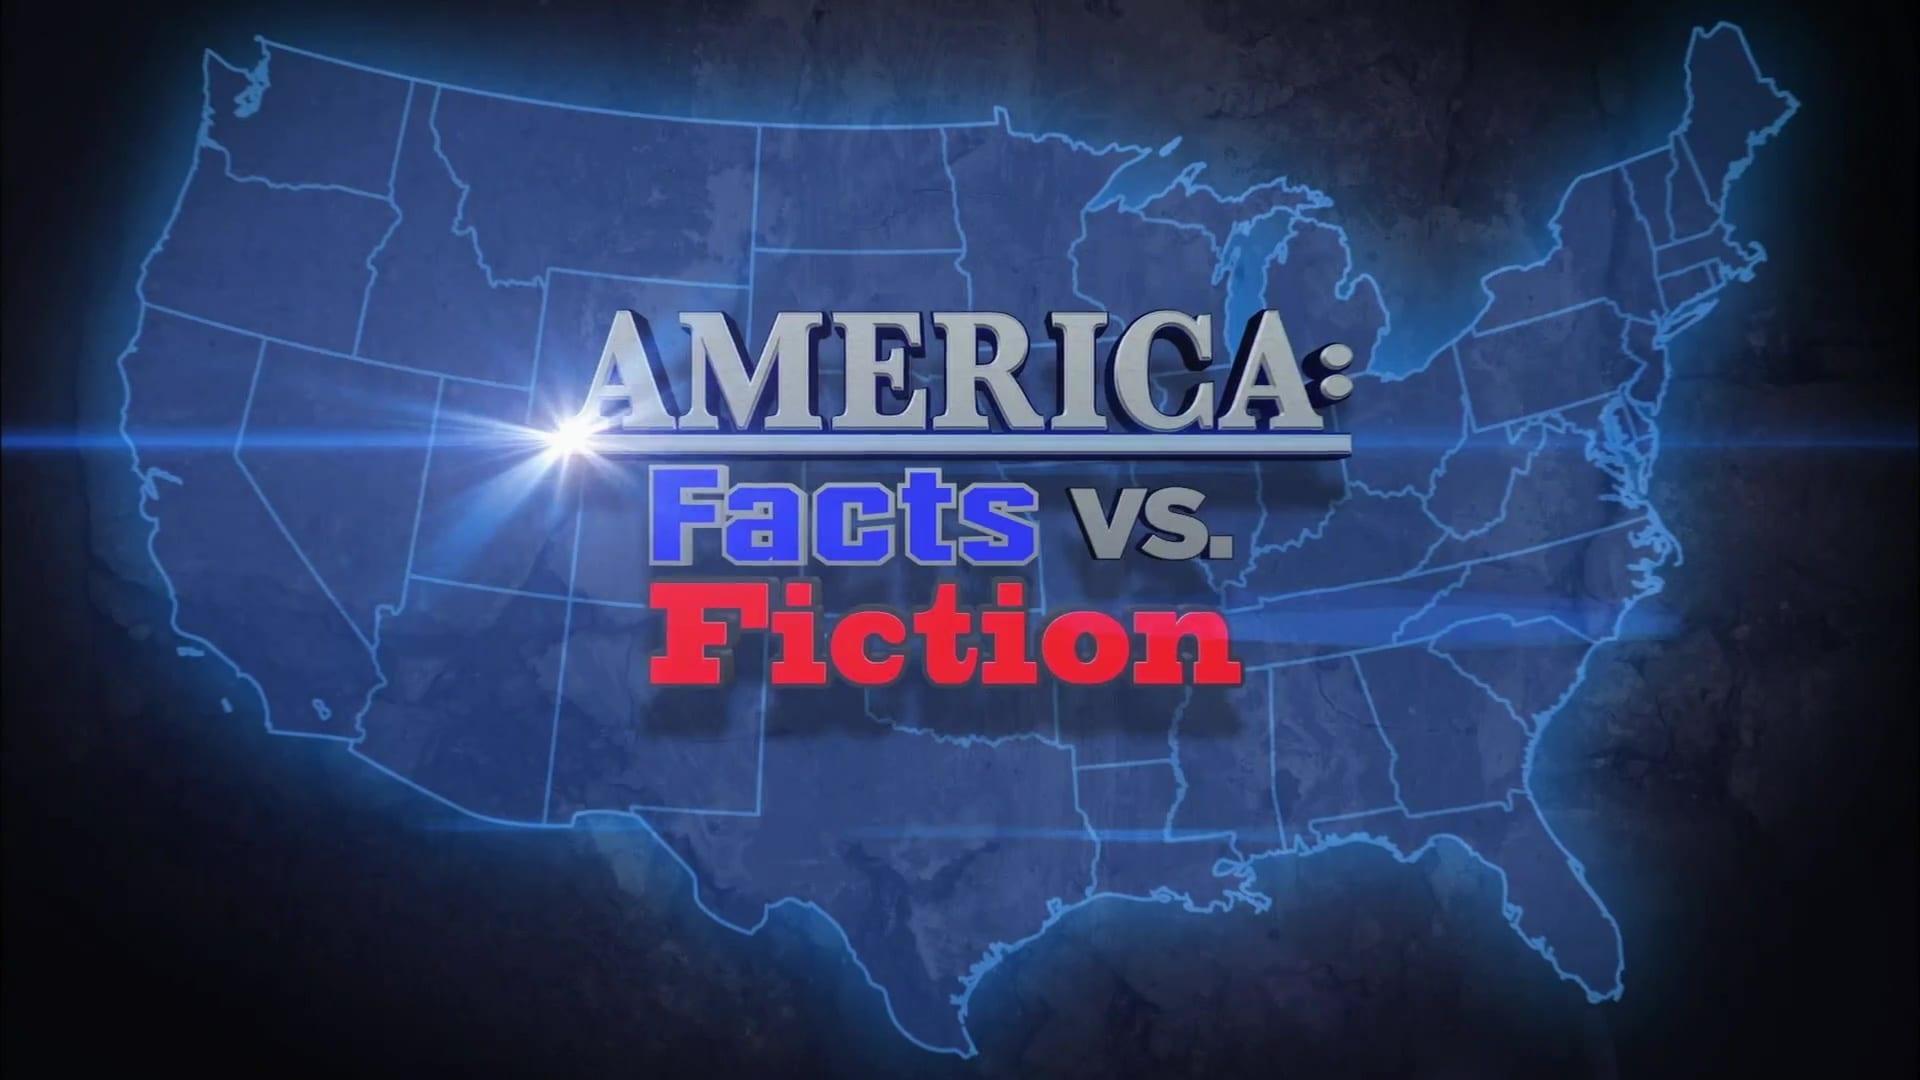 America: Facts vs. Fiction backdrop